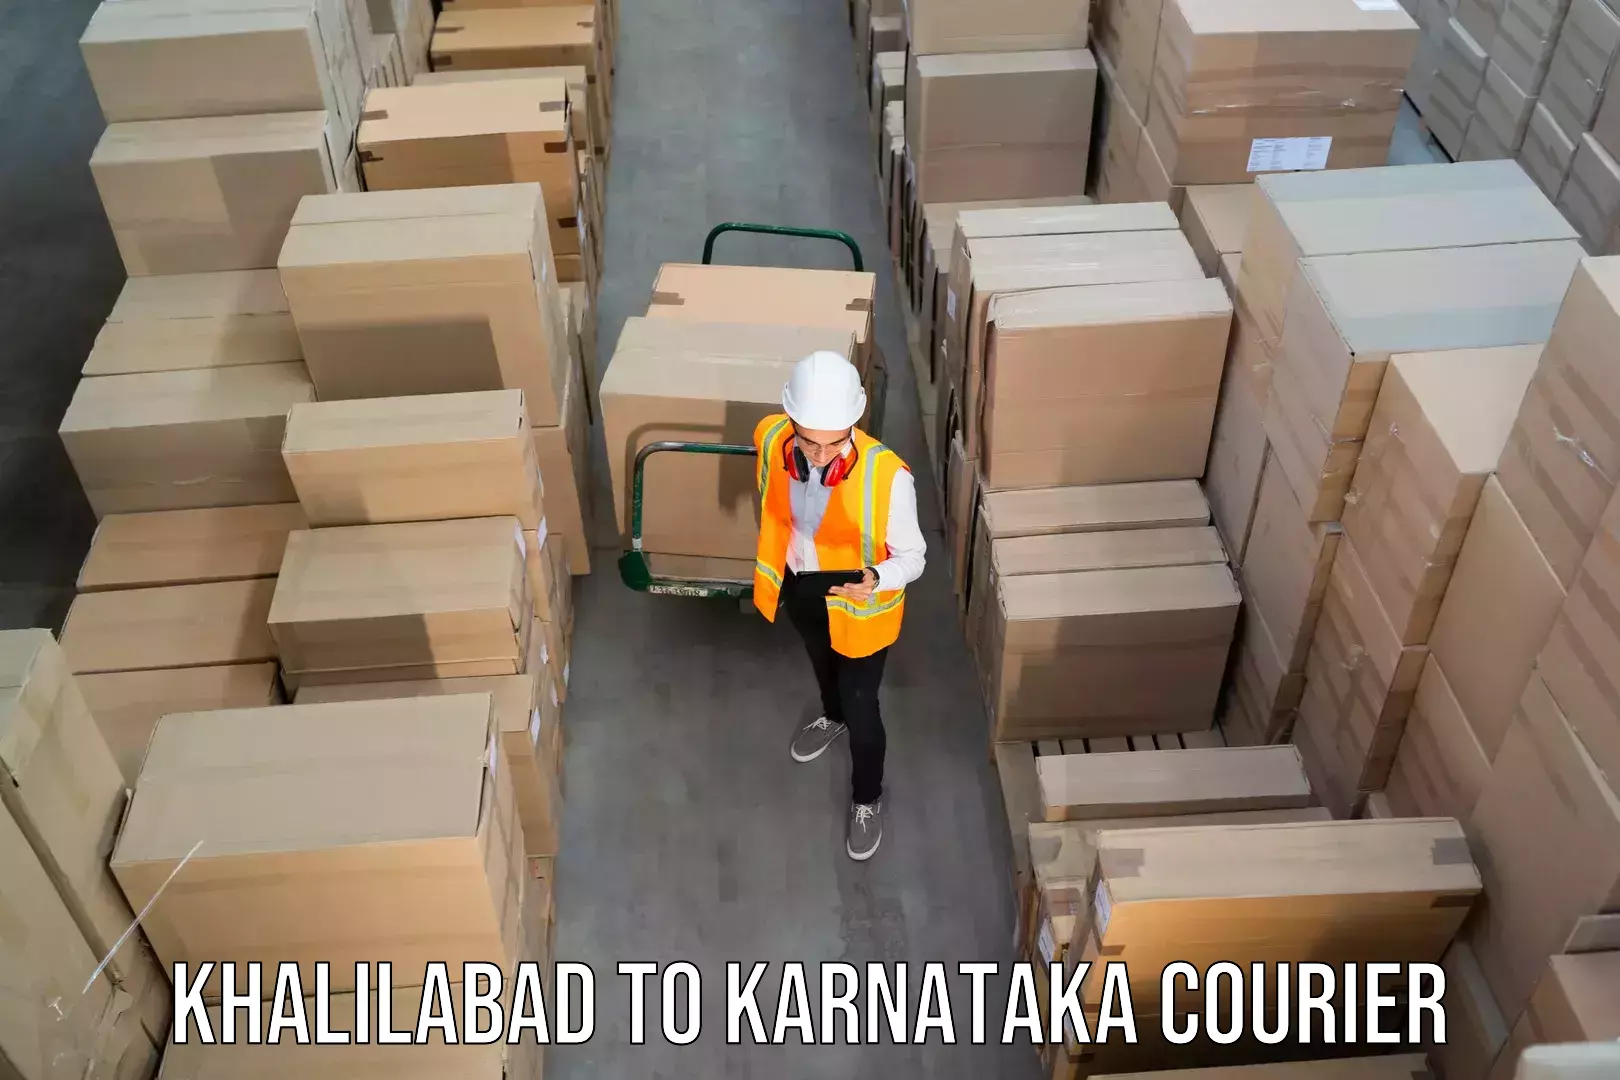 Doorstep delivery service Khalilabad to Karnataka